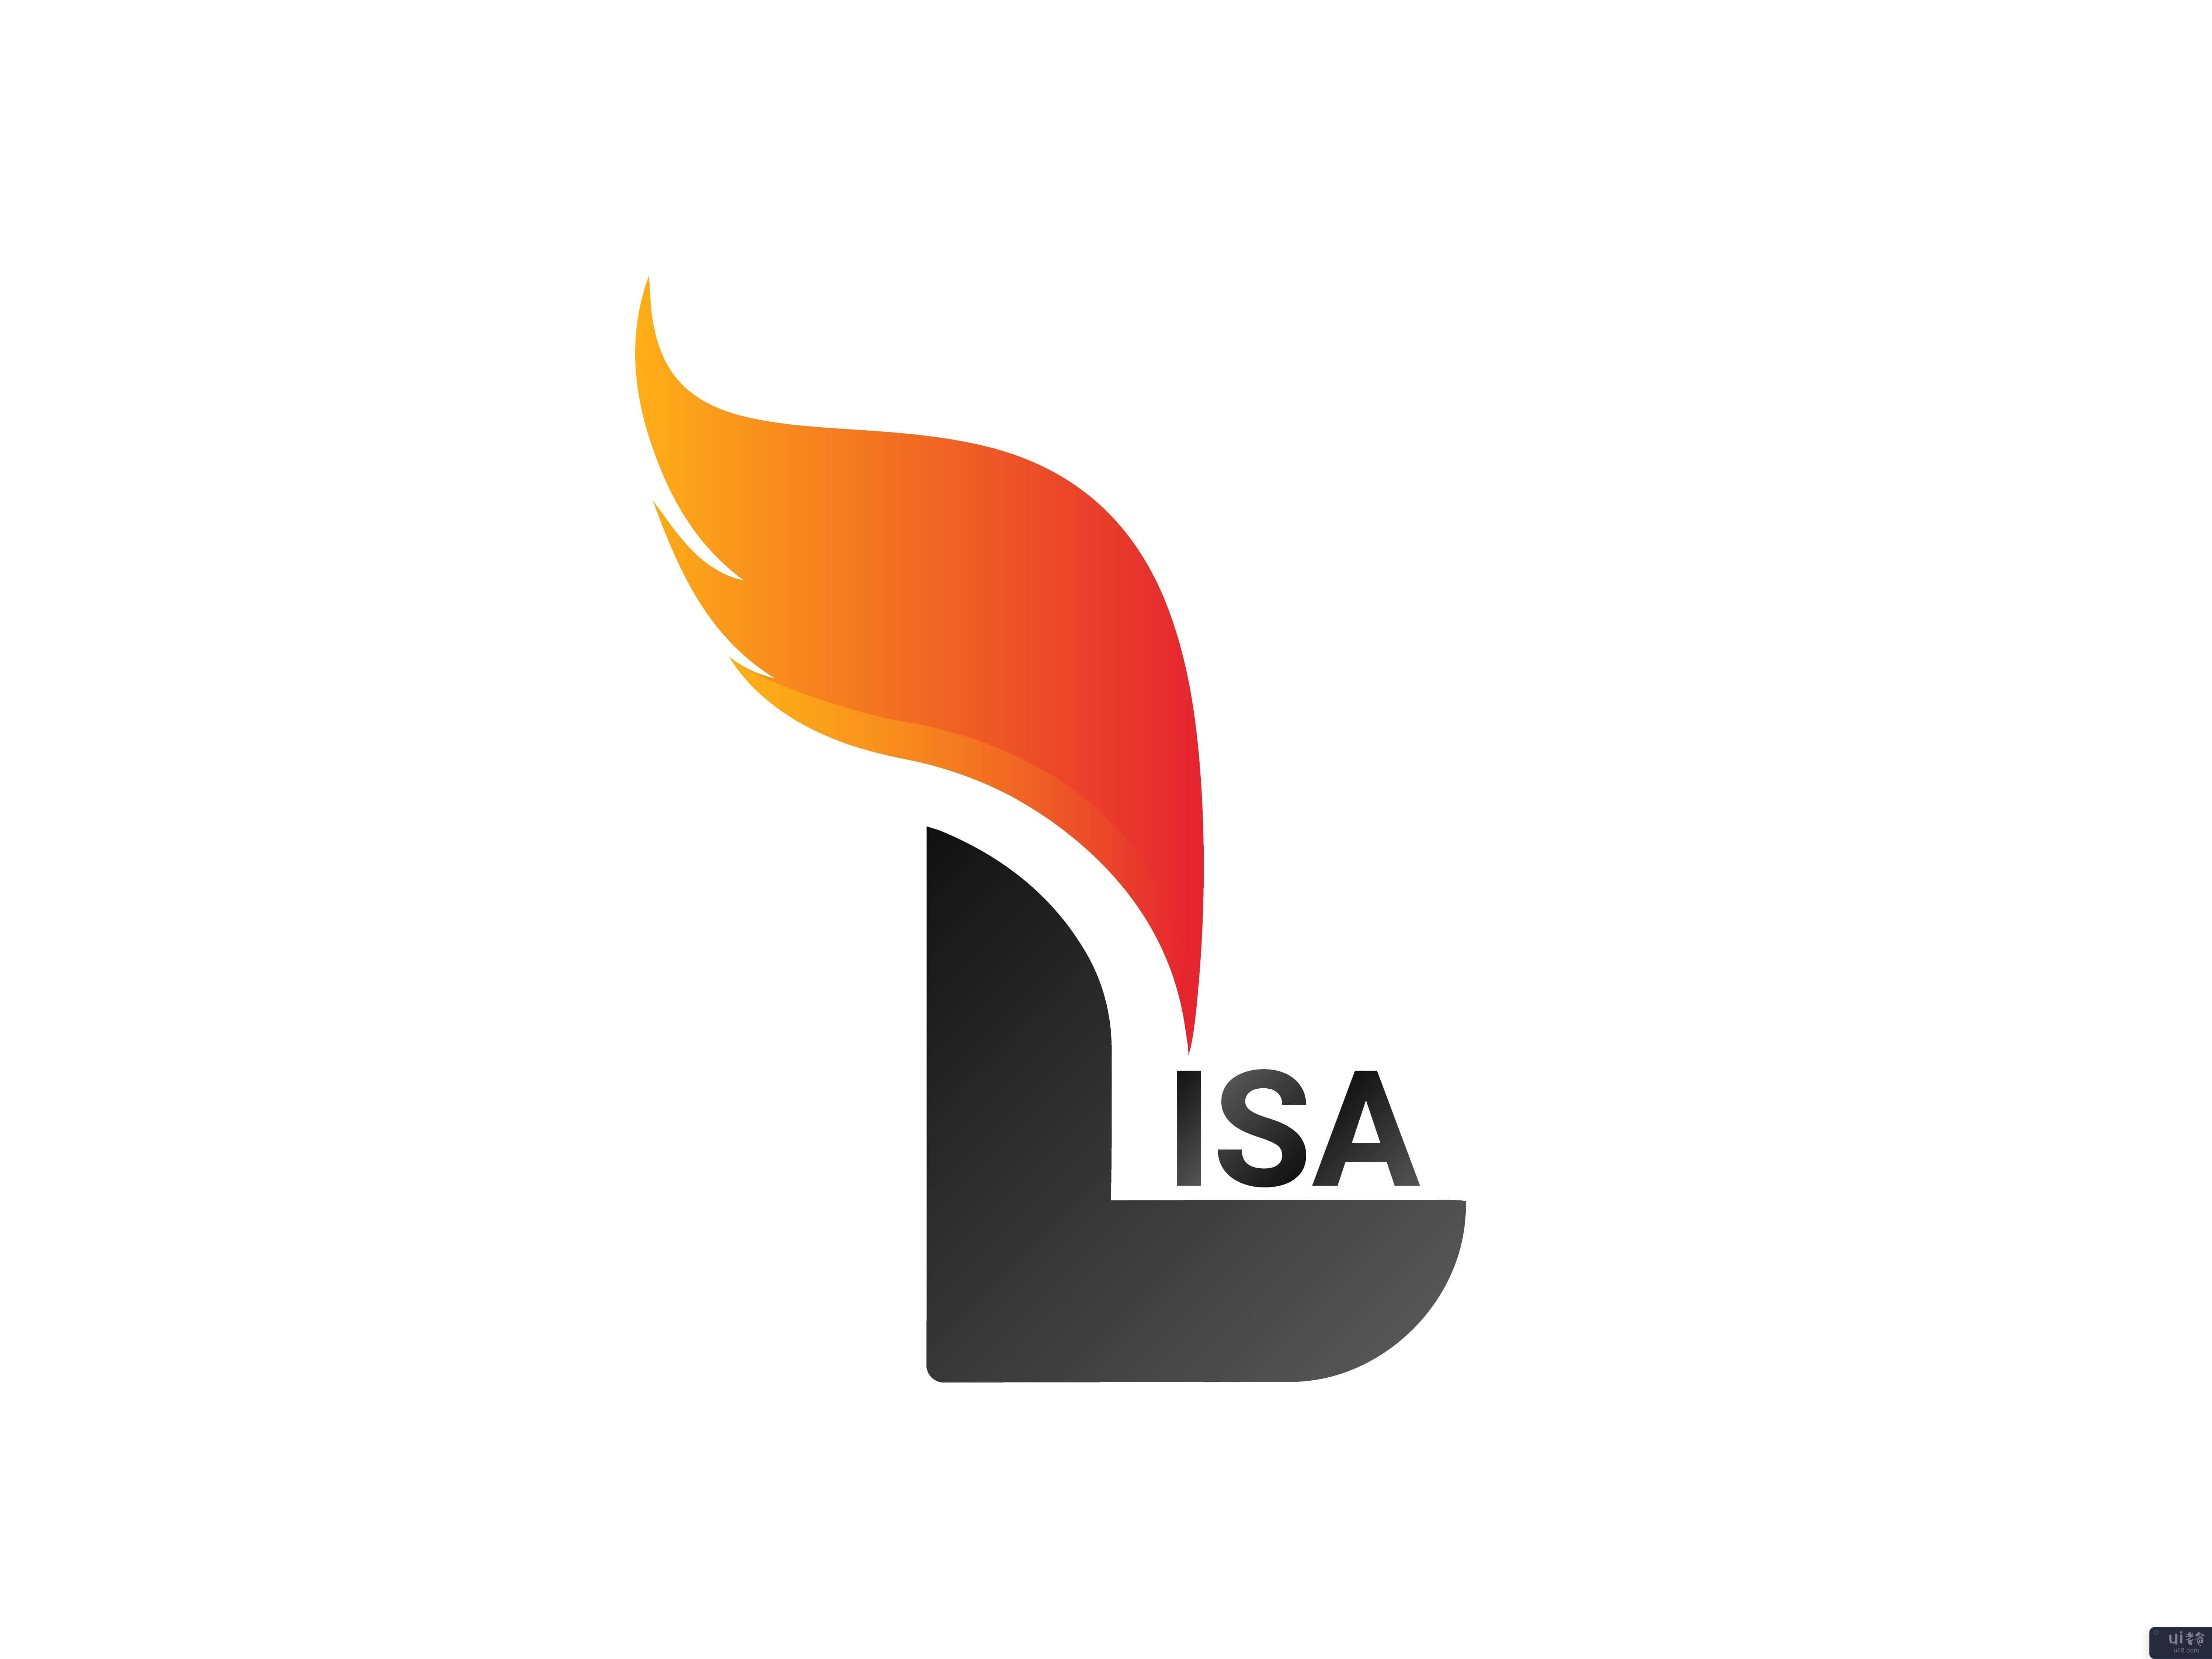 Lisa 名称徽标(Lisa Name Logo)插图